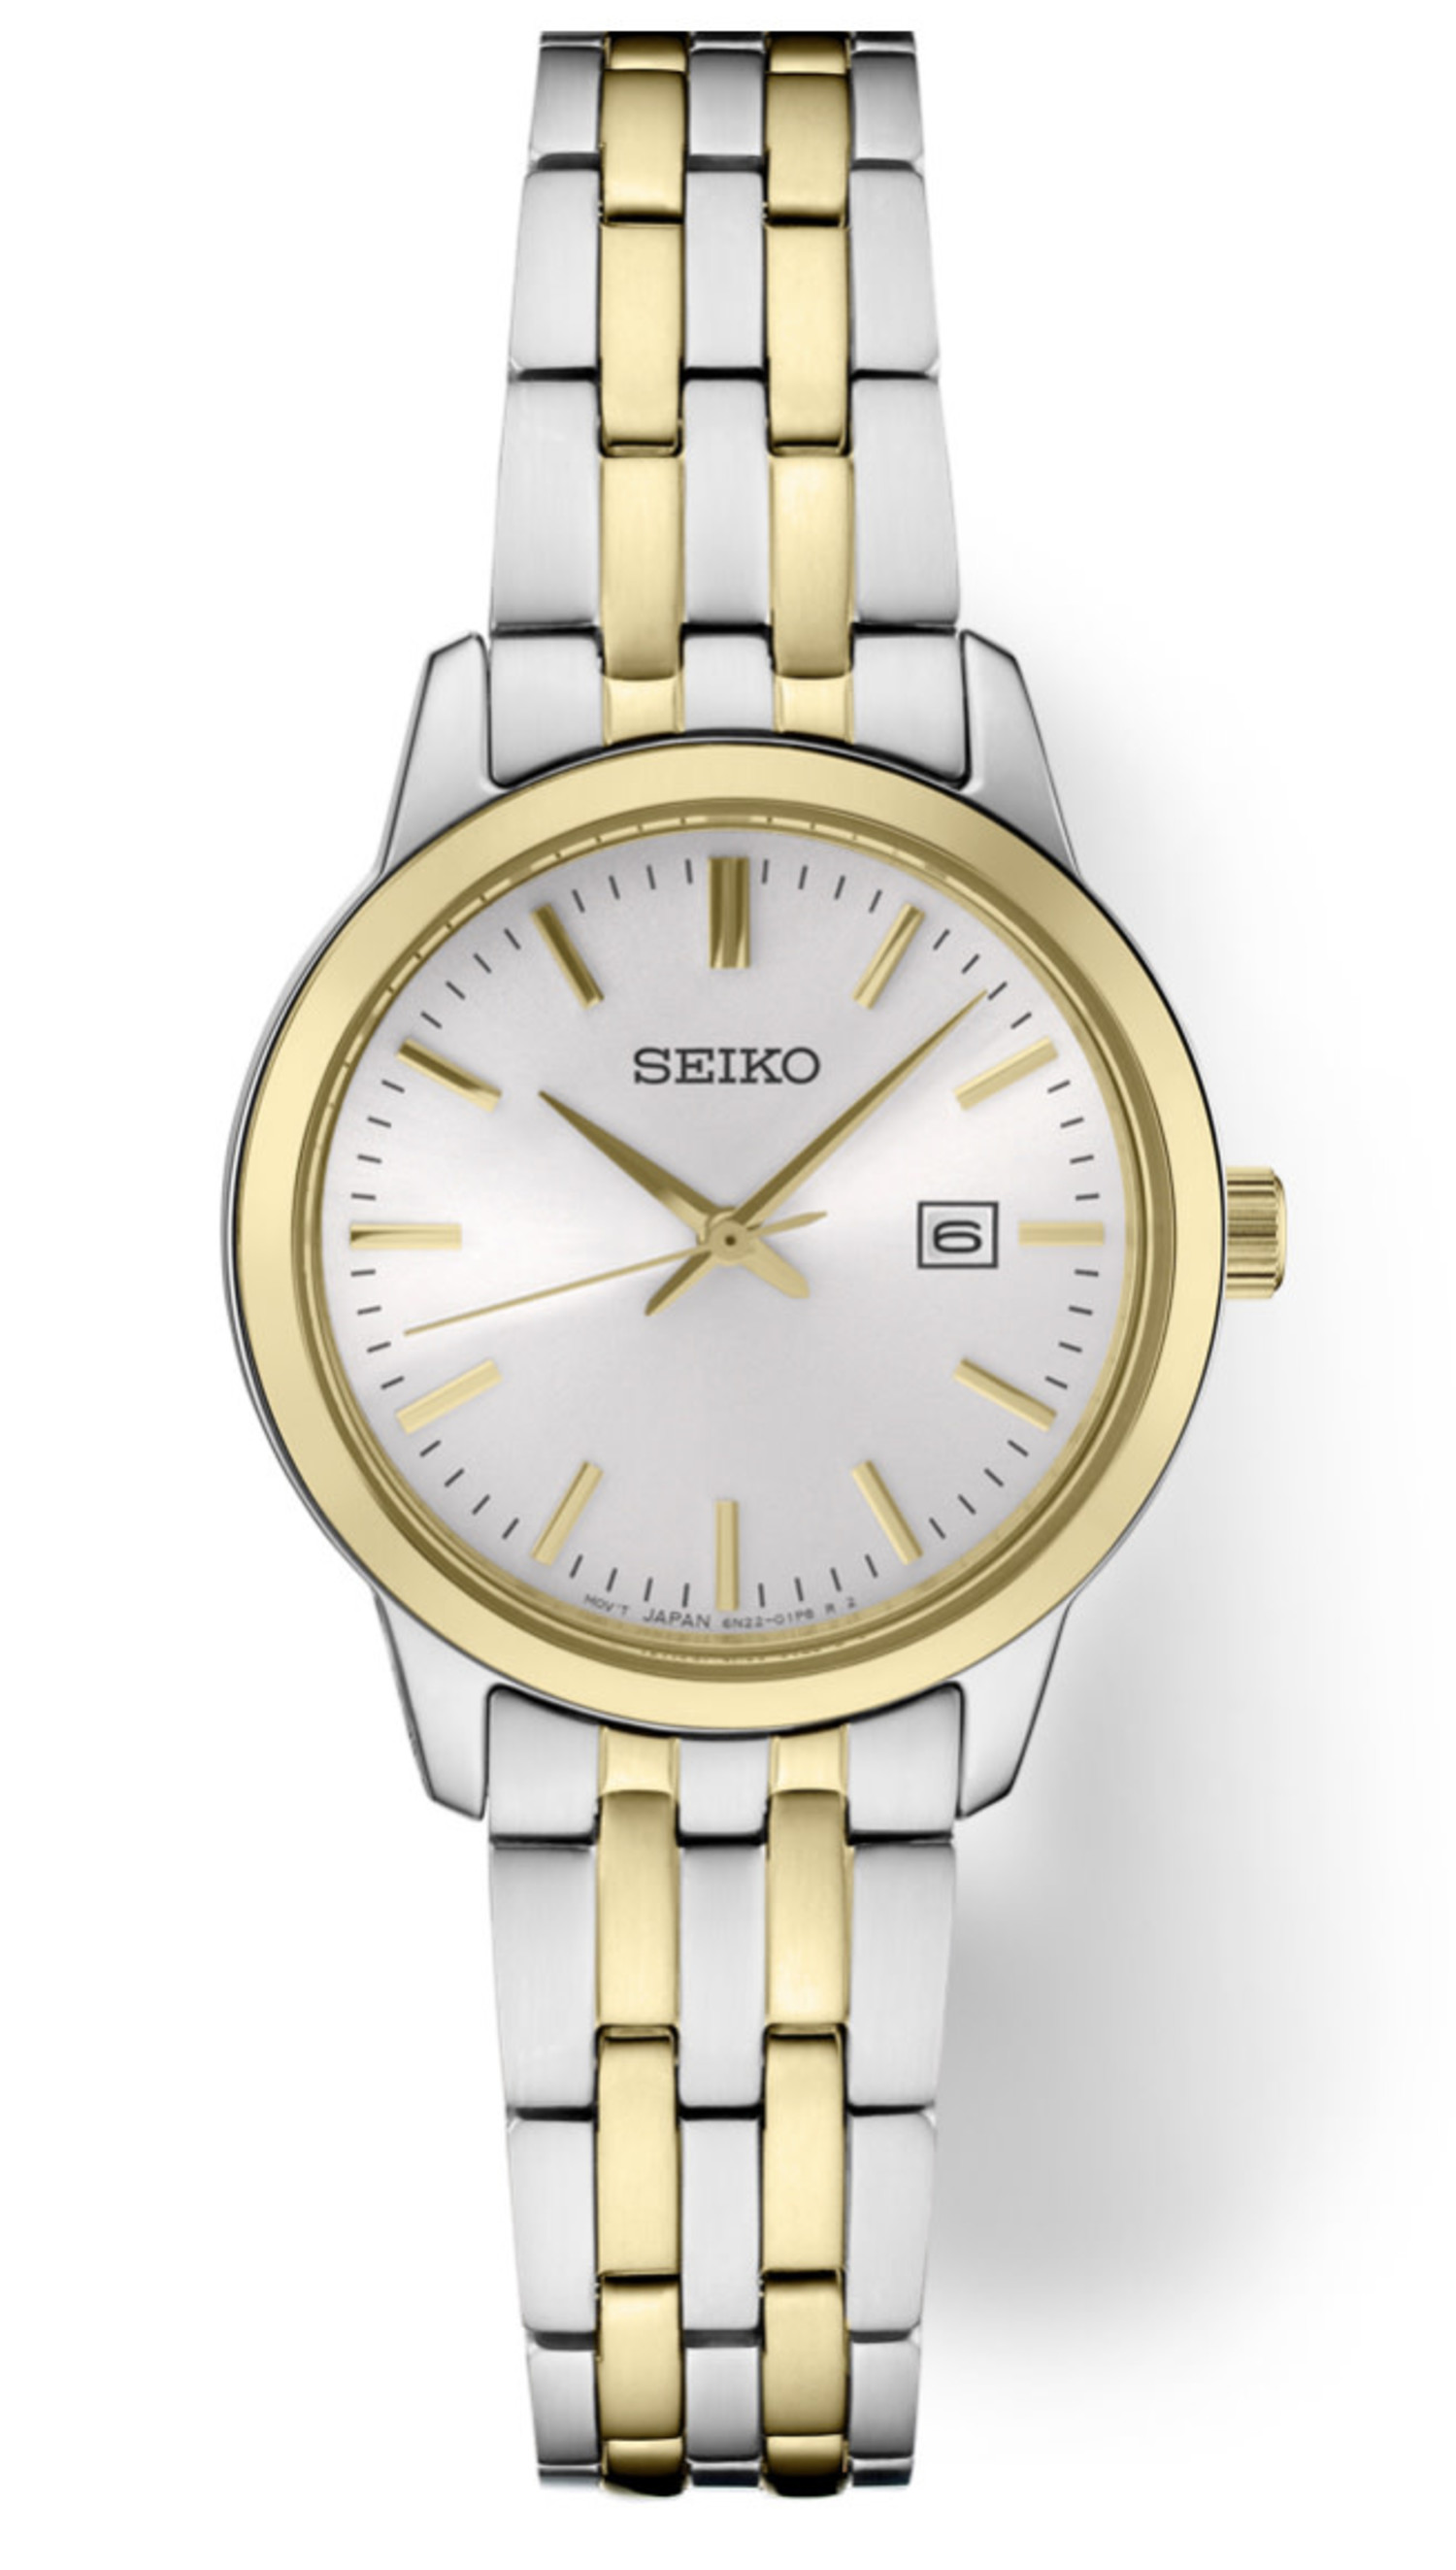 SEIKO watch - Royale Jewelers